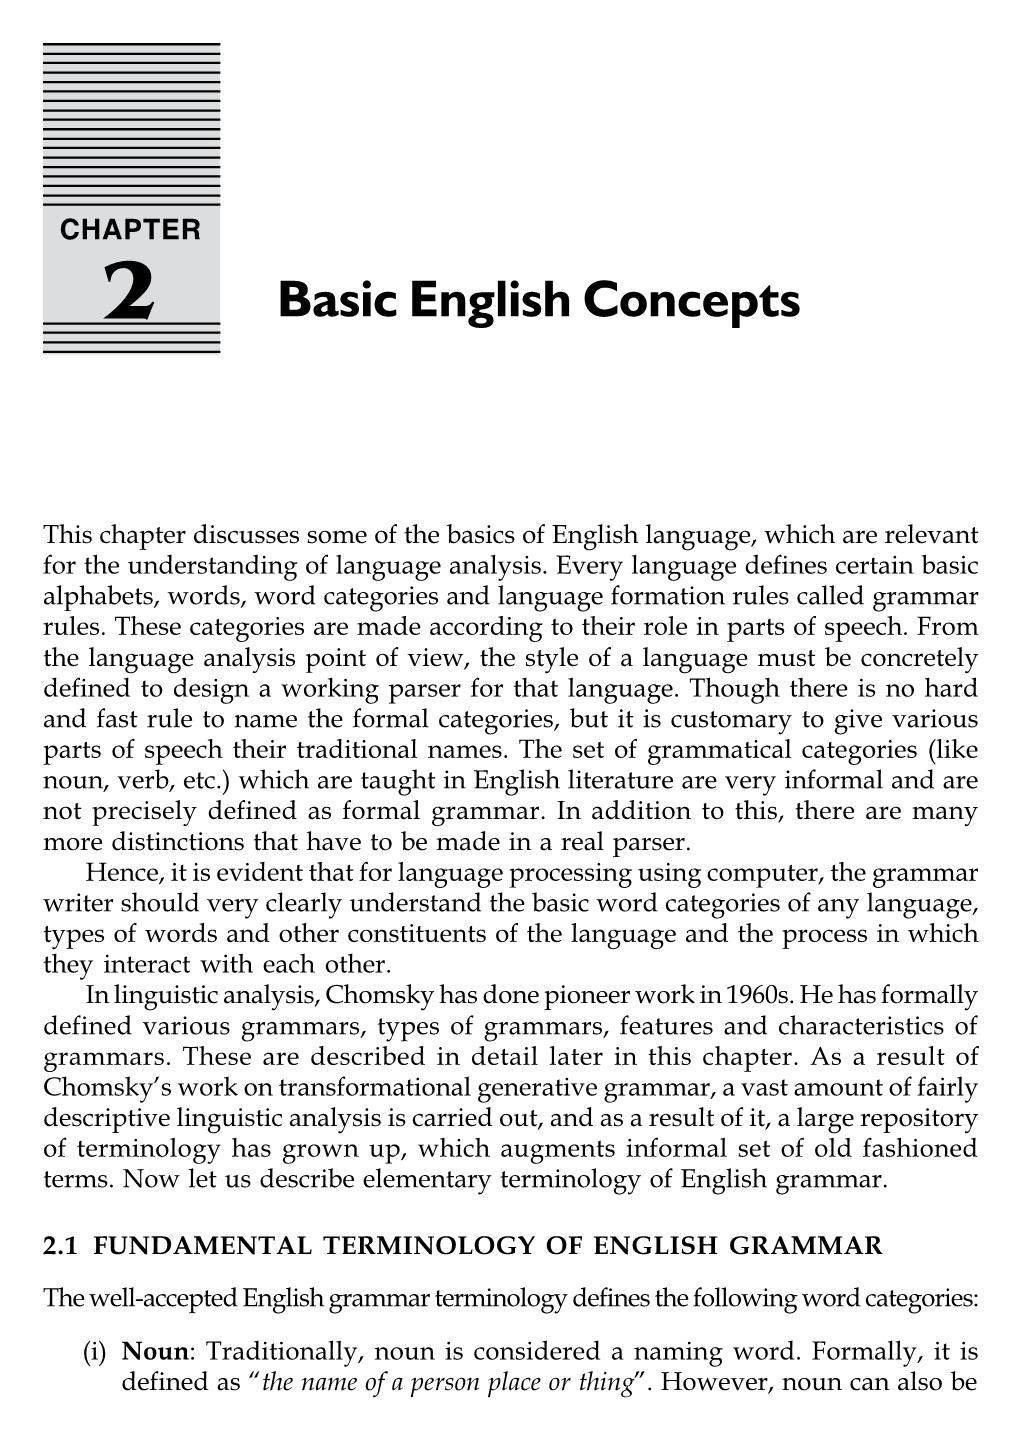 Basic English Concepts